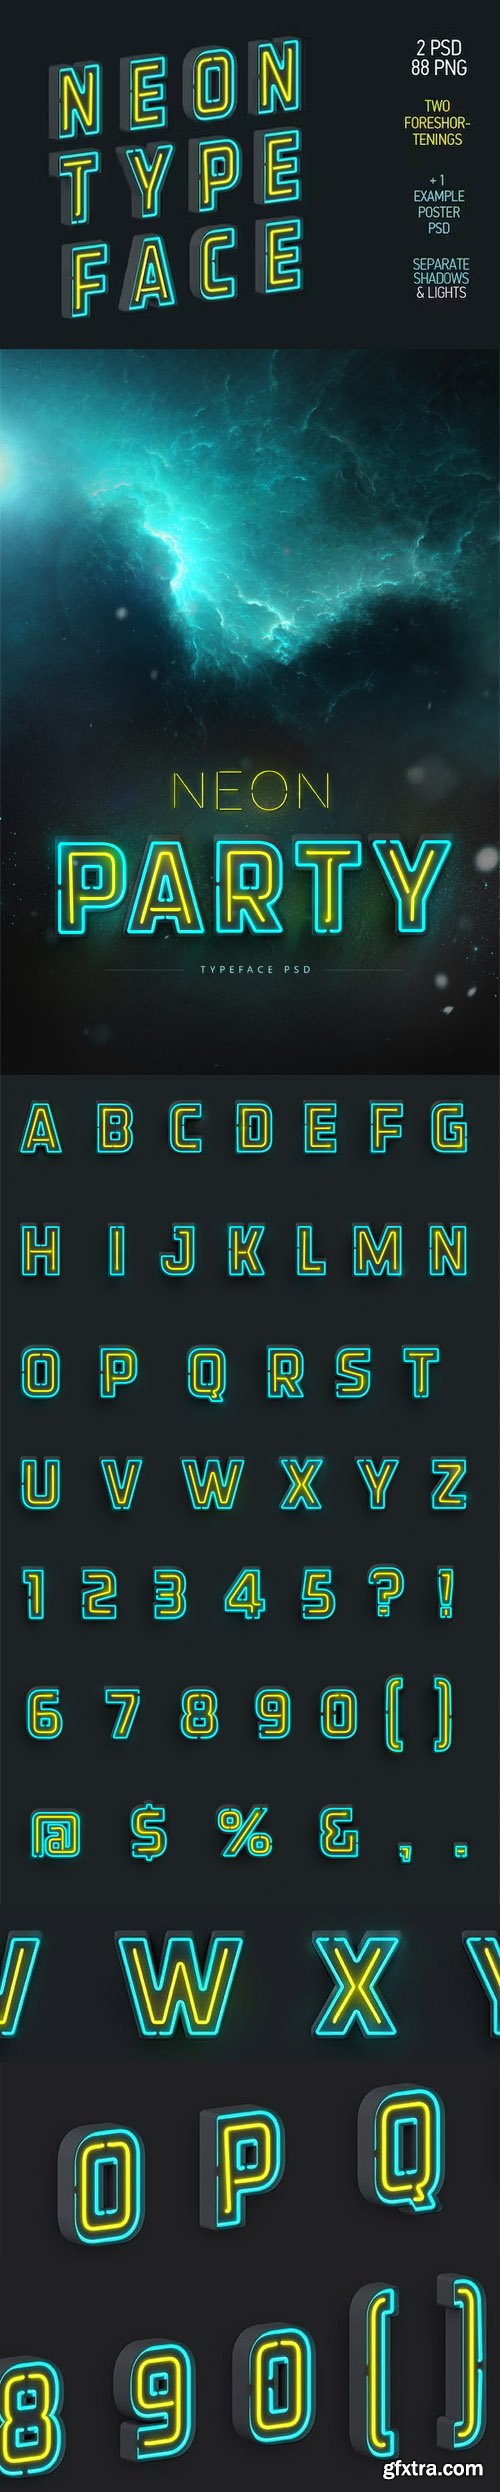 Neon Typeface PSD + PNG Templates